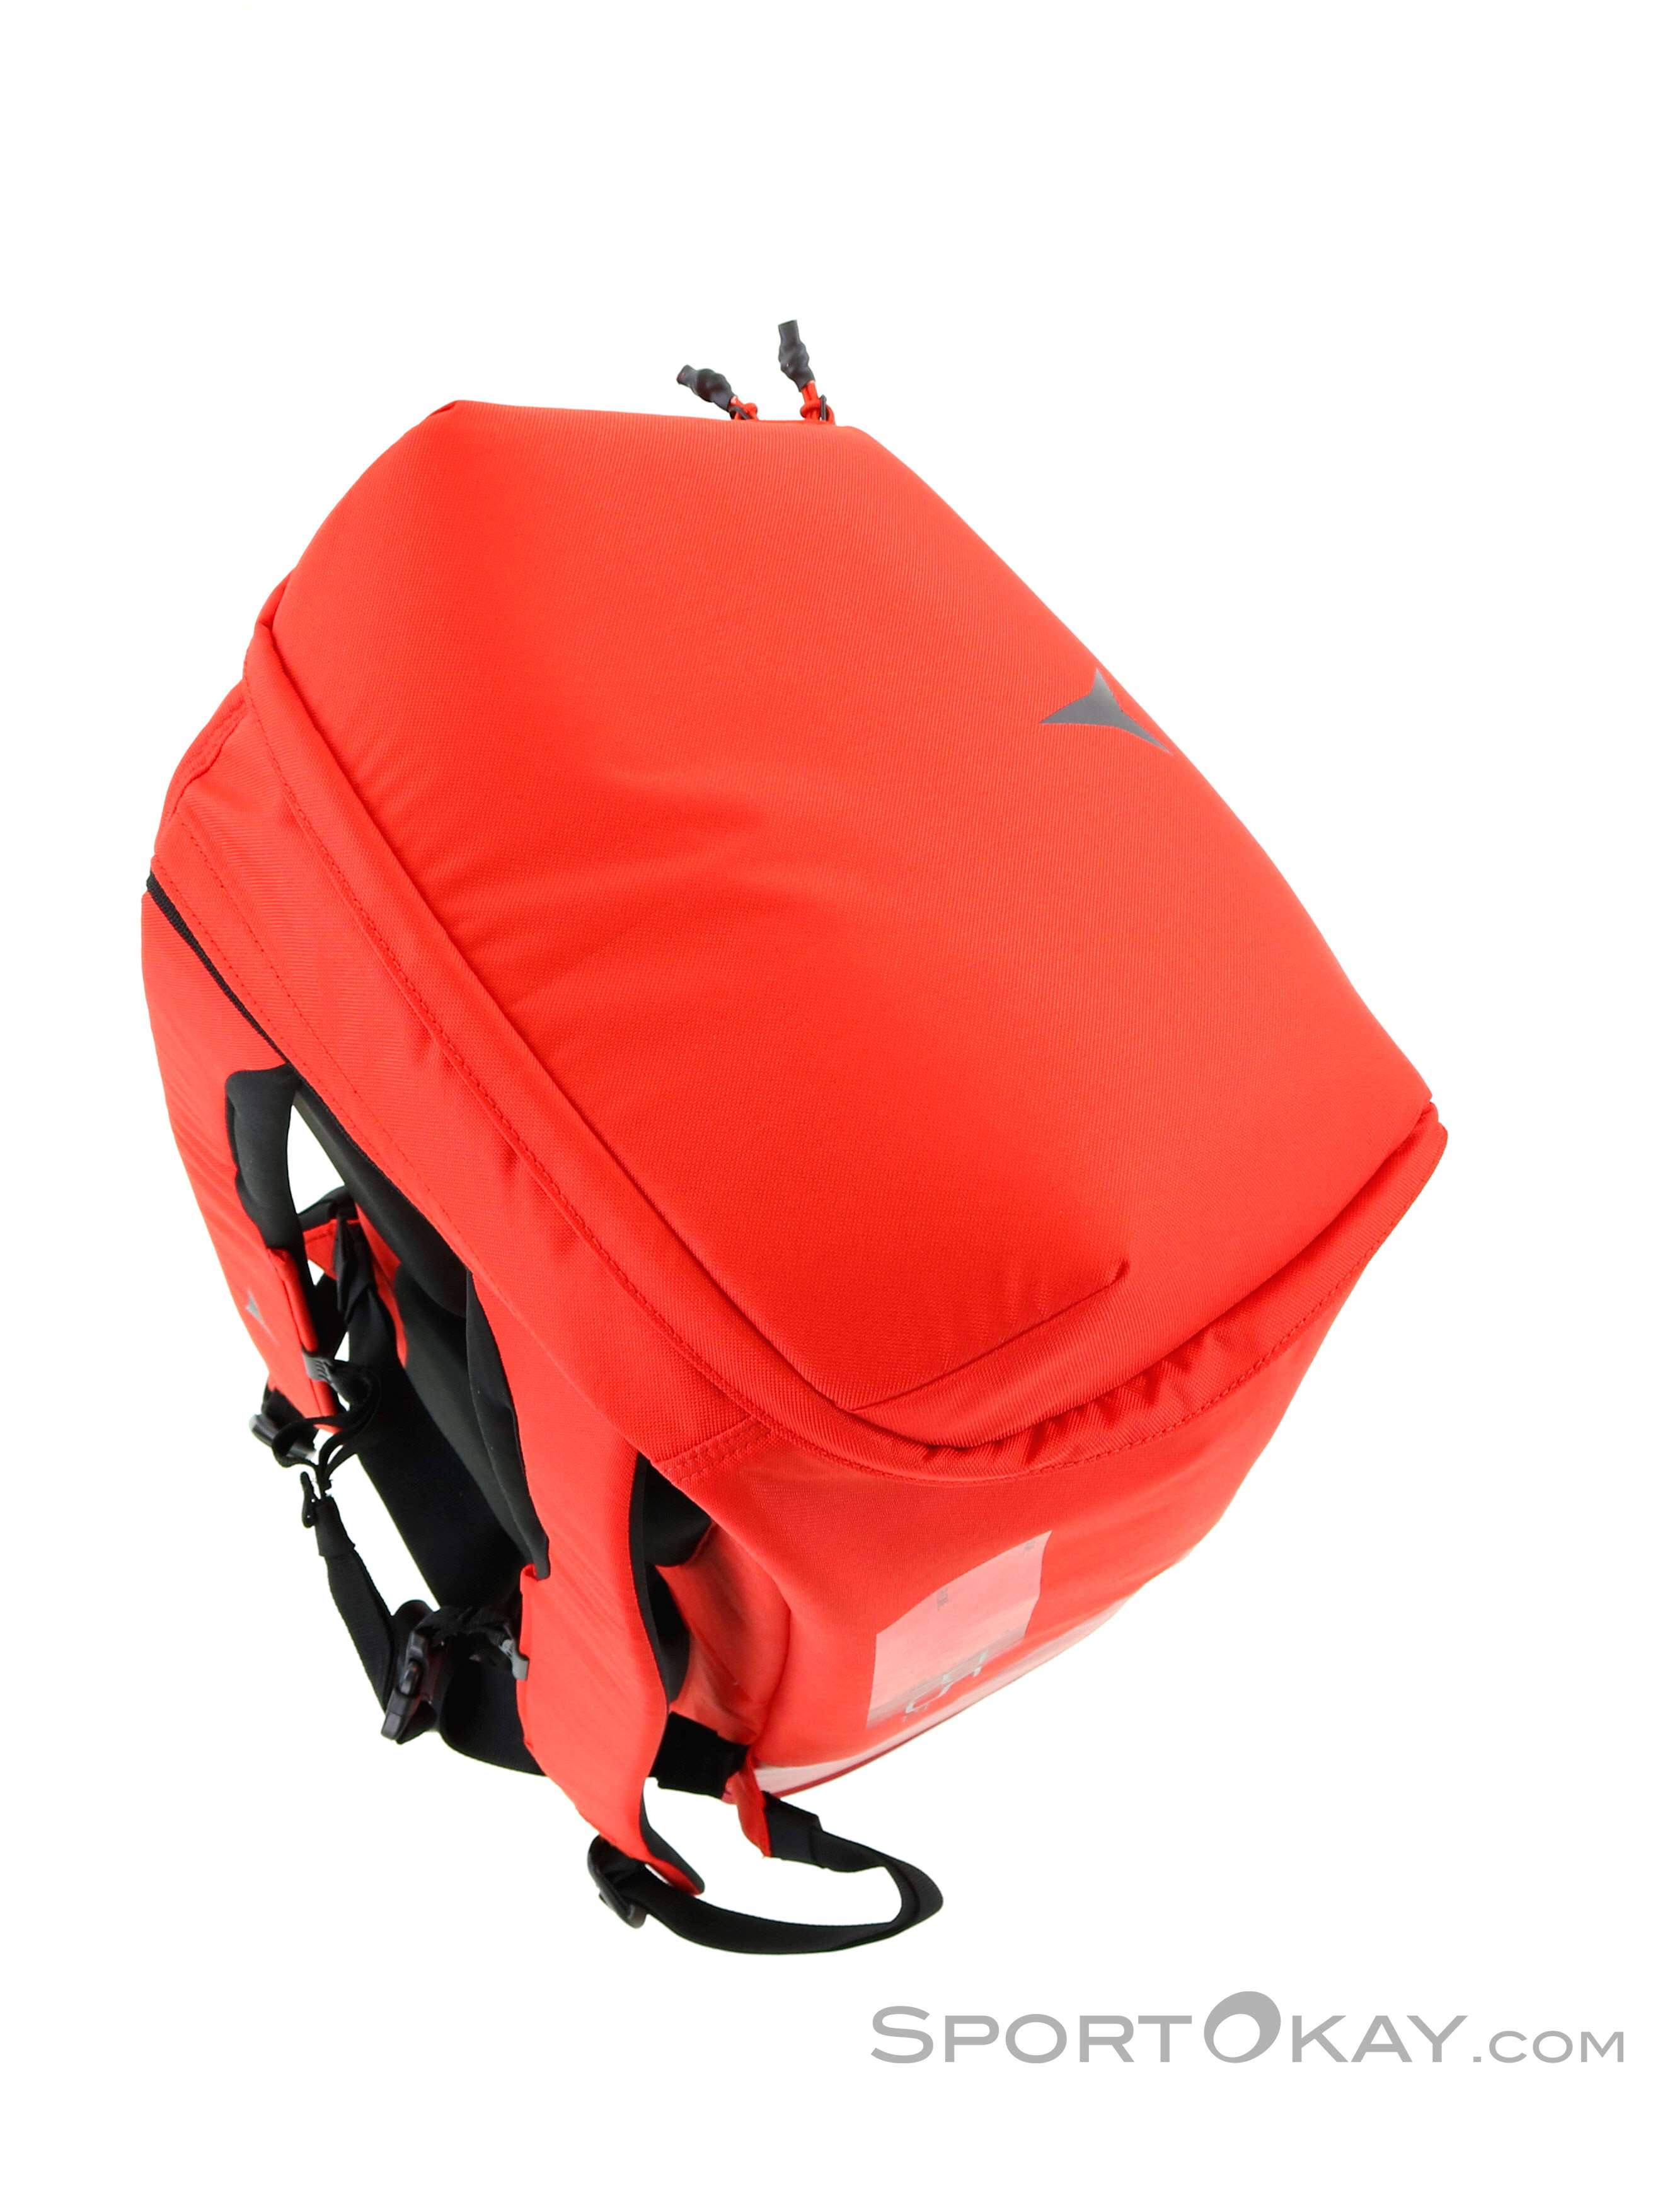 Atomic RS Pack 50l Backpack - Backpacks - Safety - Ski & Freeride